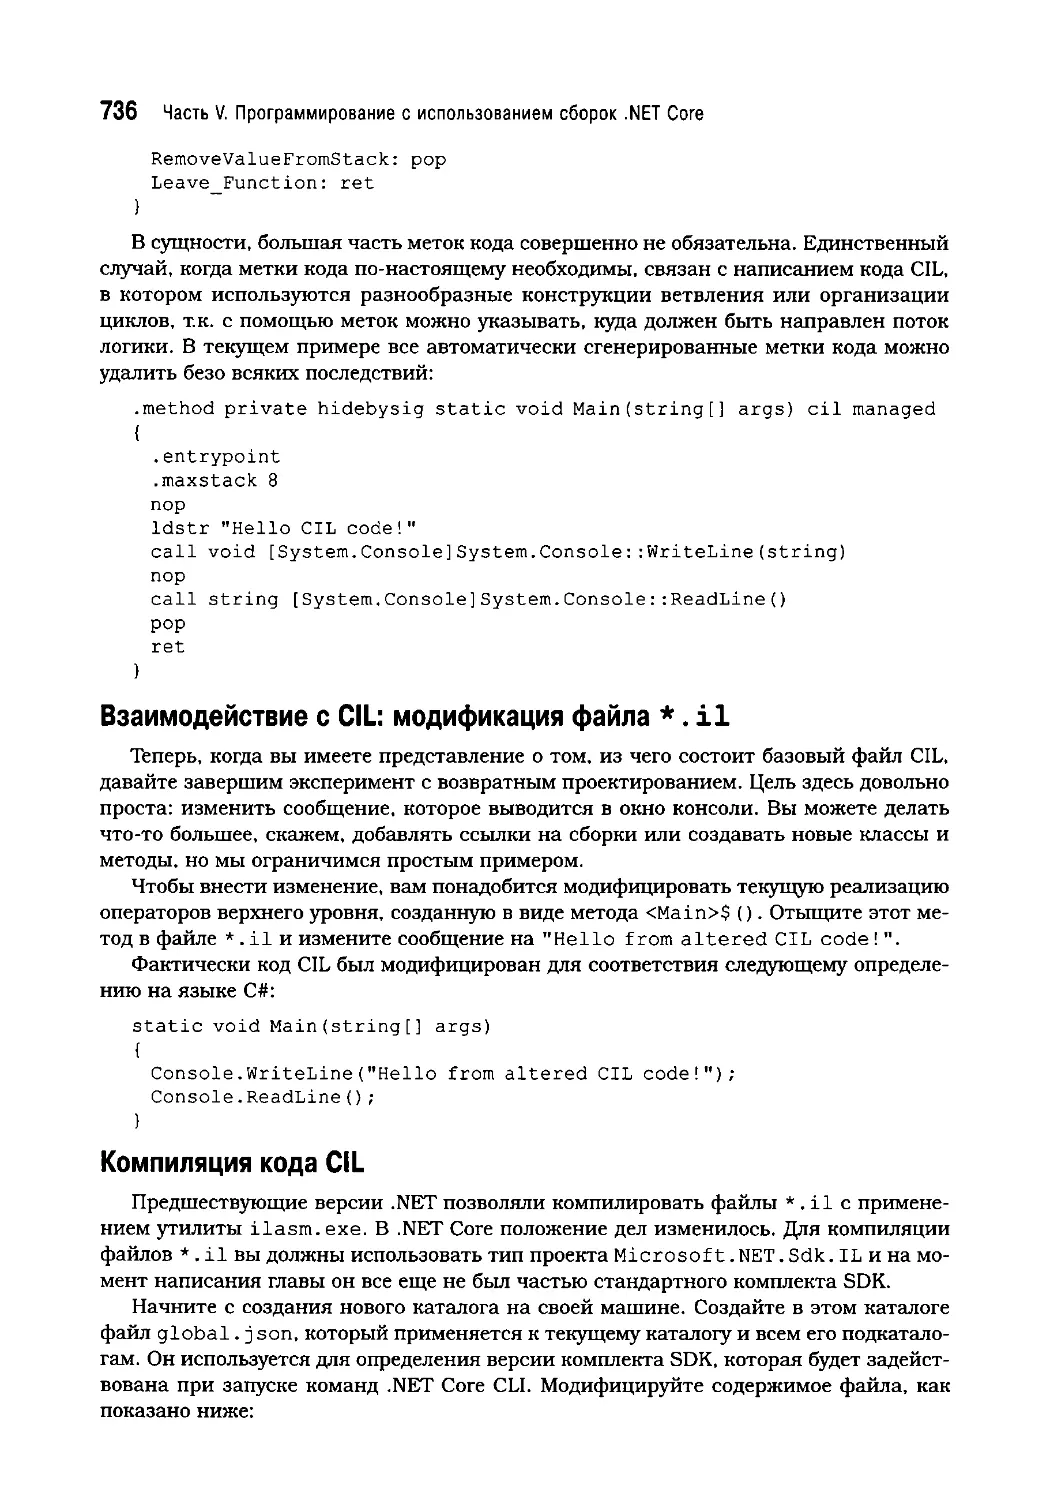 Взаимодействие с CIL: модификация файла *.il
Компиляция кода CIL